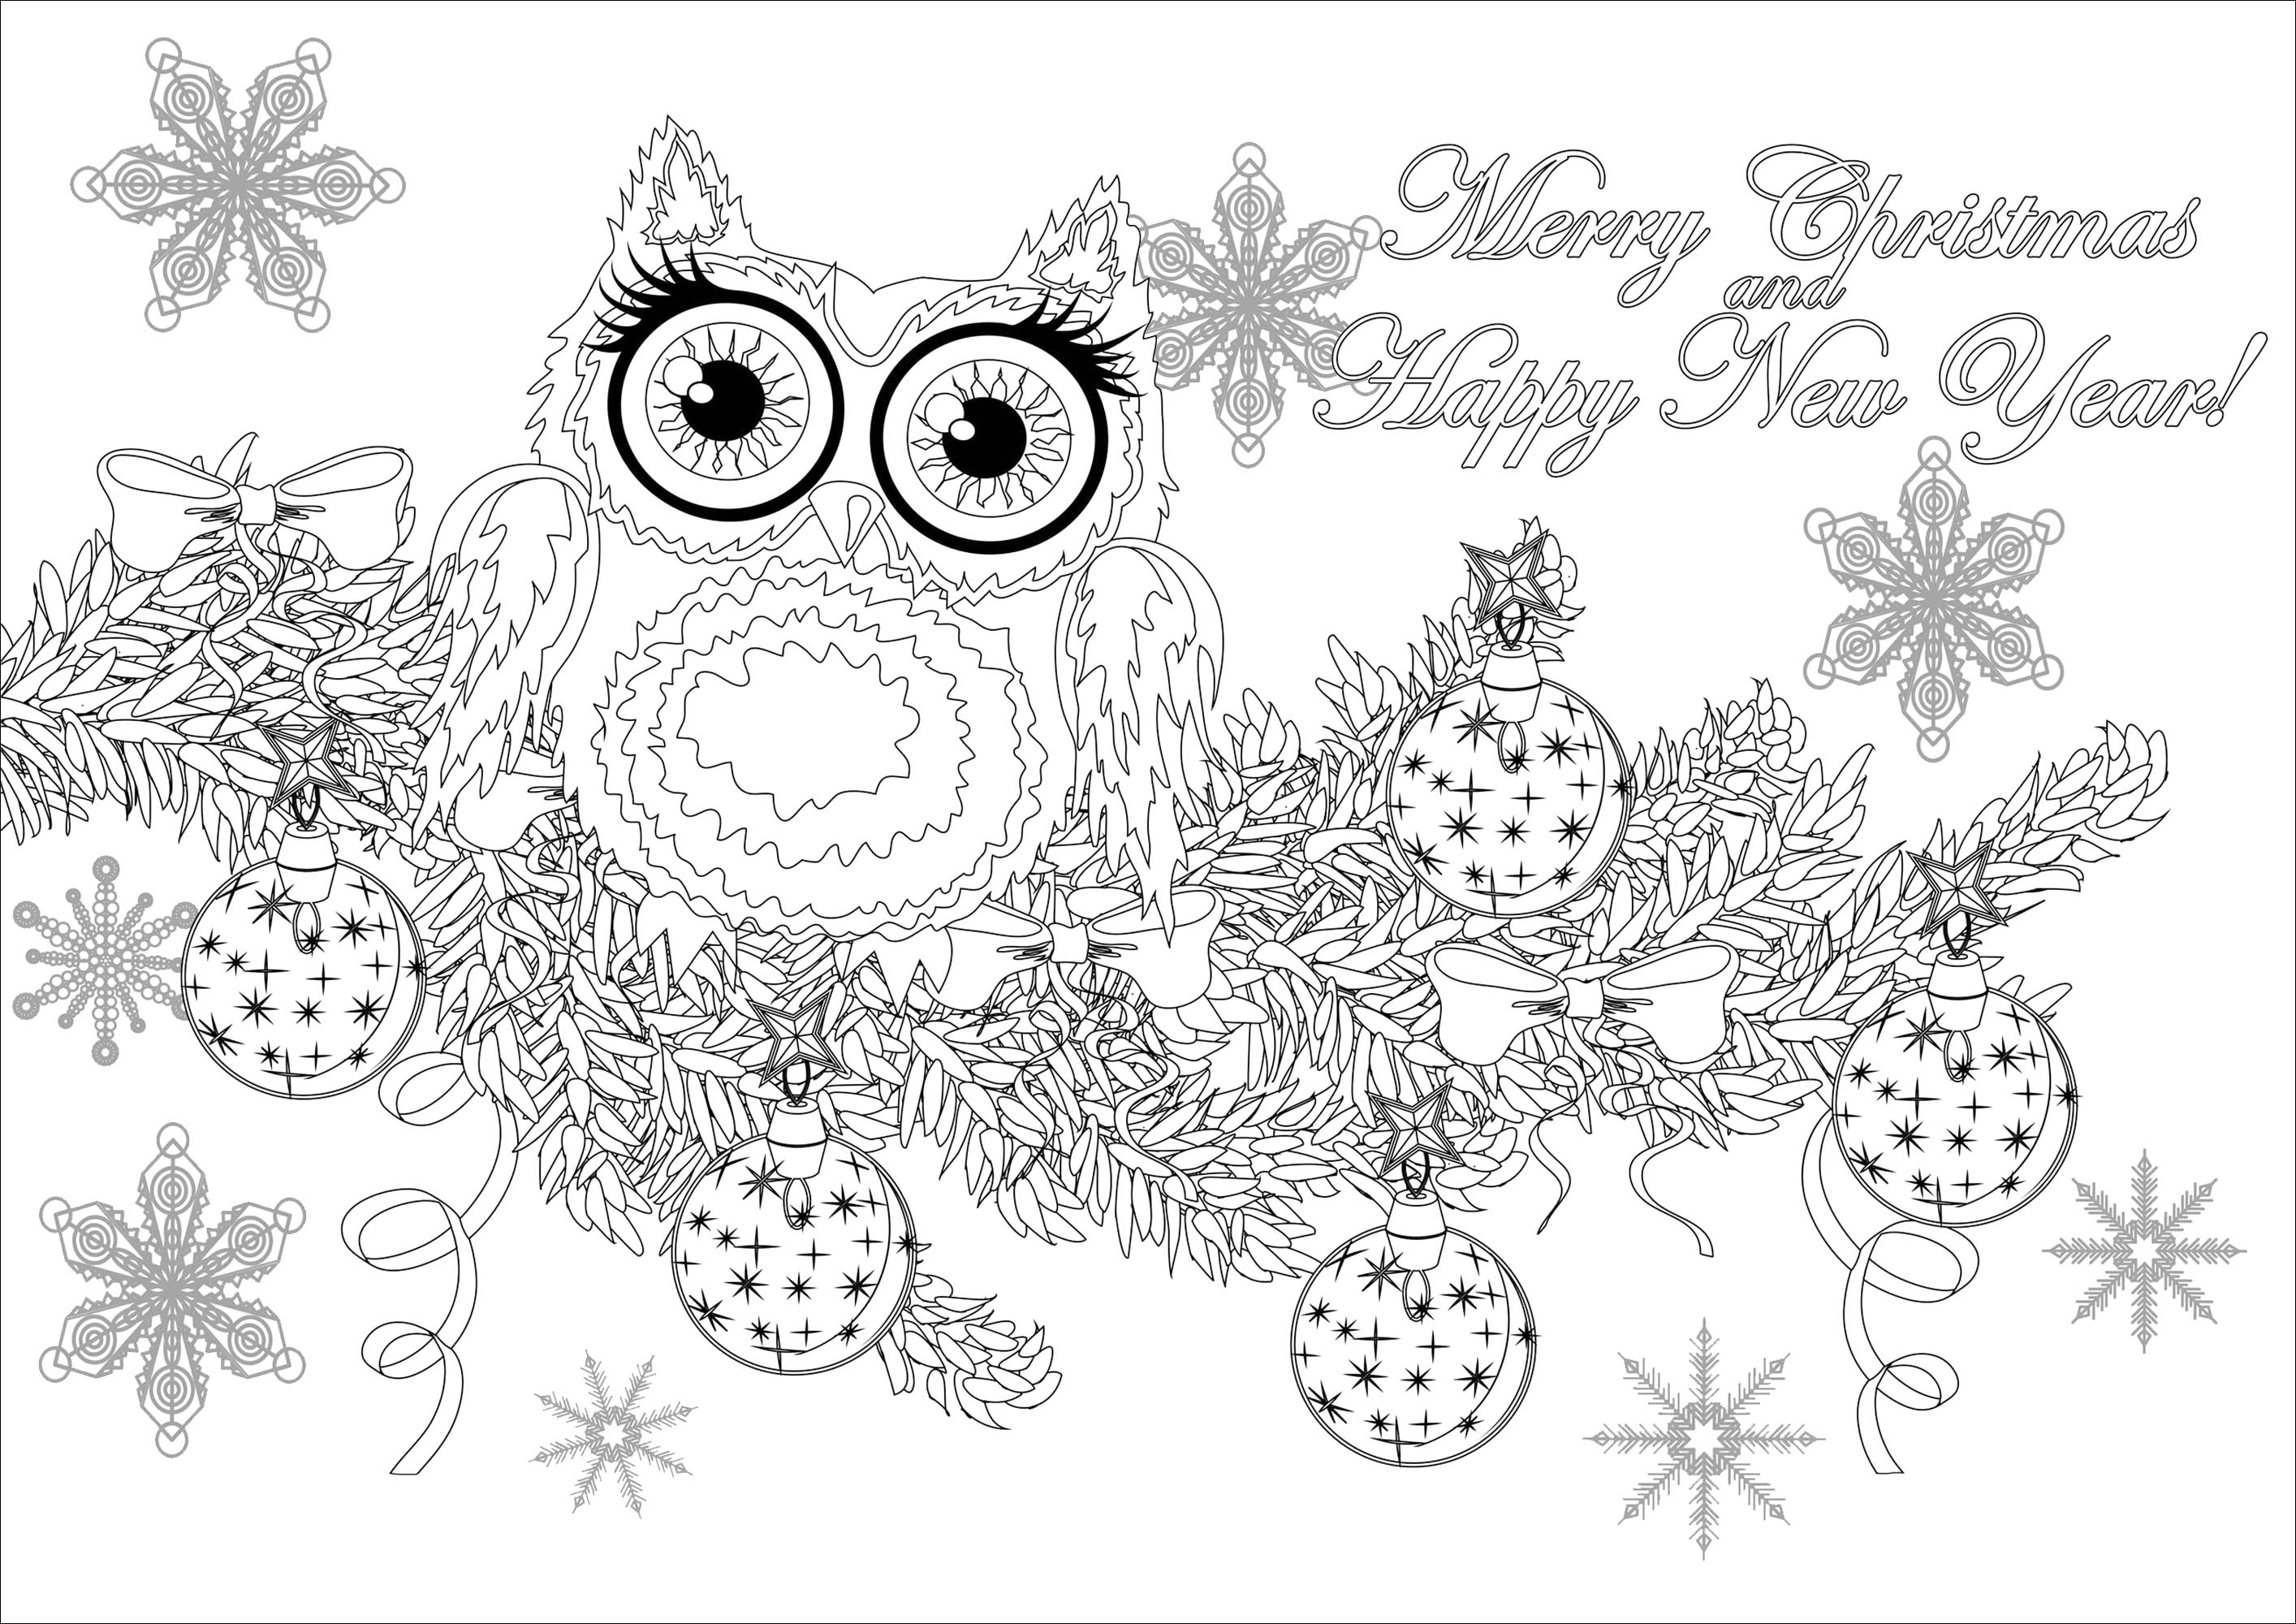 Desenhos para colorir de Natal para imprimir, Fonte : 123rf   Artista : Oksana Tsvyk